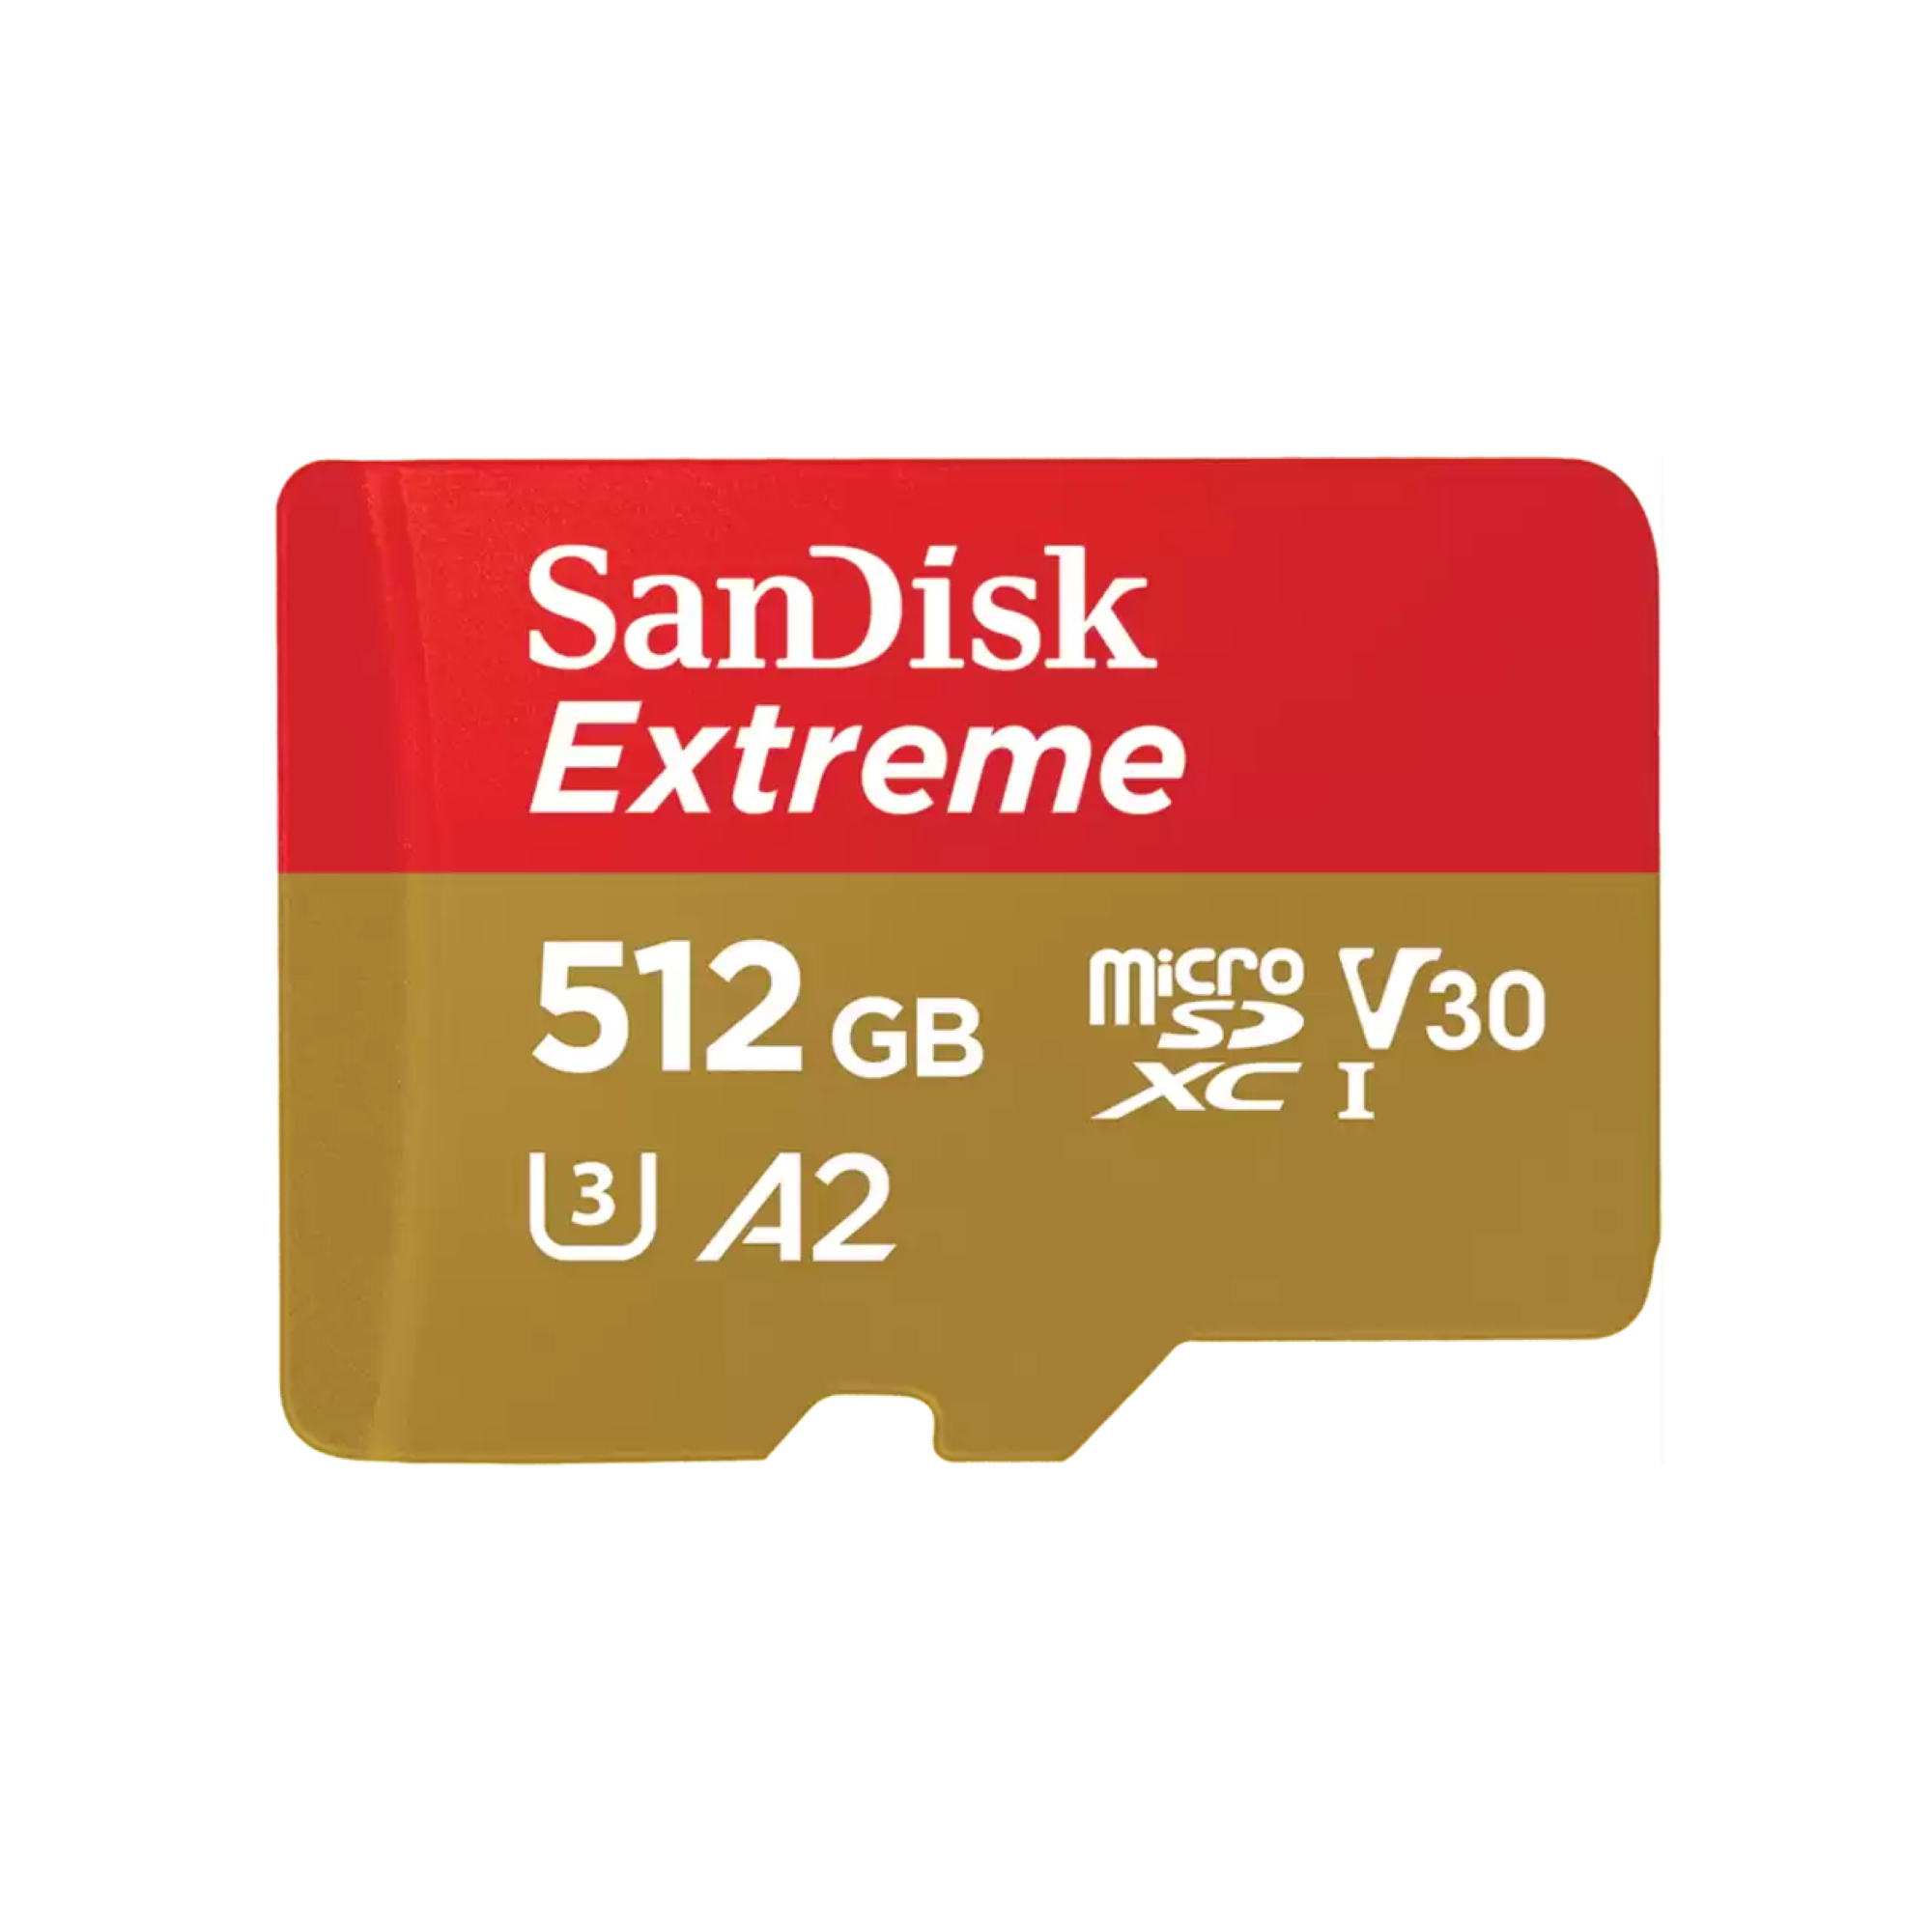 SanDisk 512GB Extreme microSDXC UHS-I Memory Card